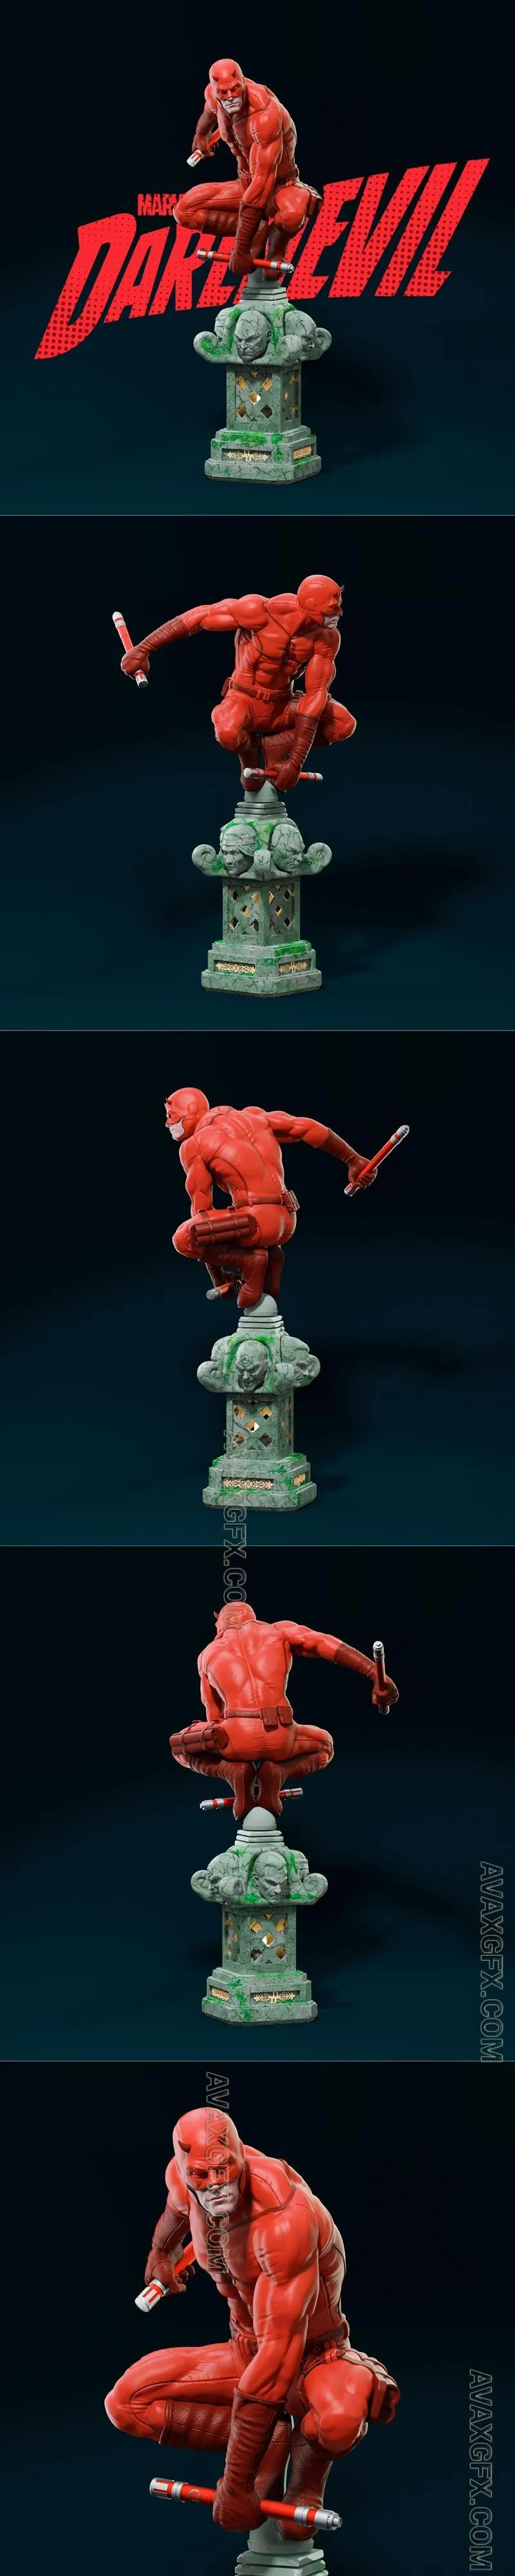 Daredevil by Edson Carvalho - STL 3D Model